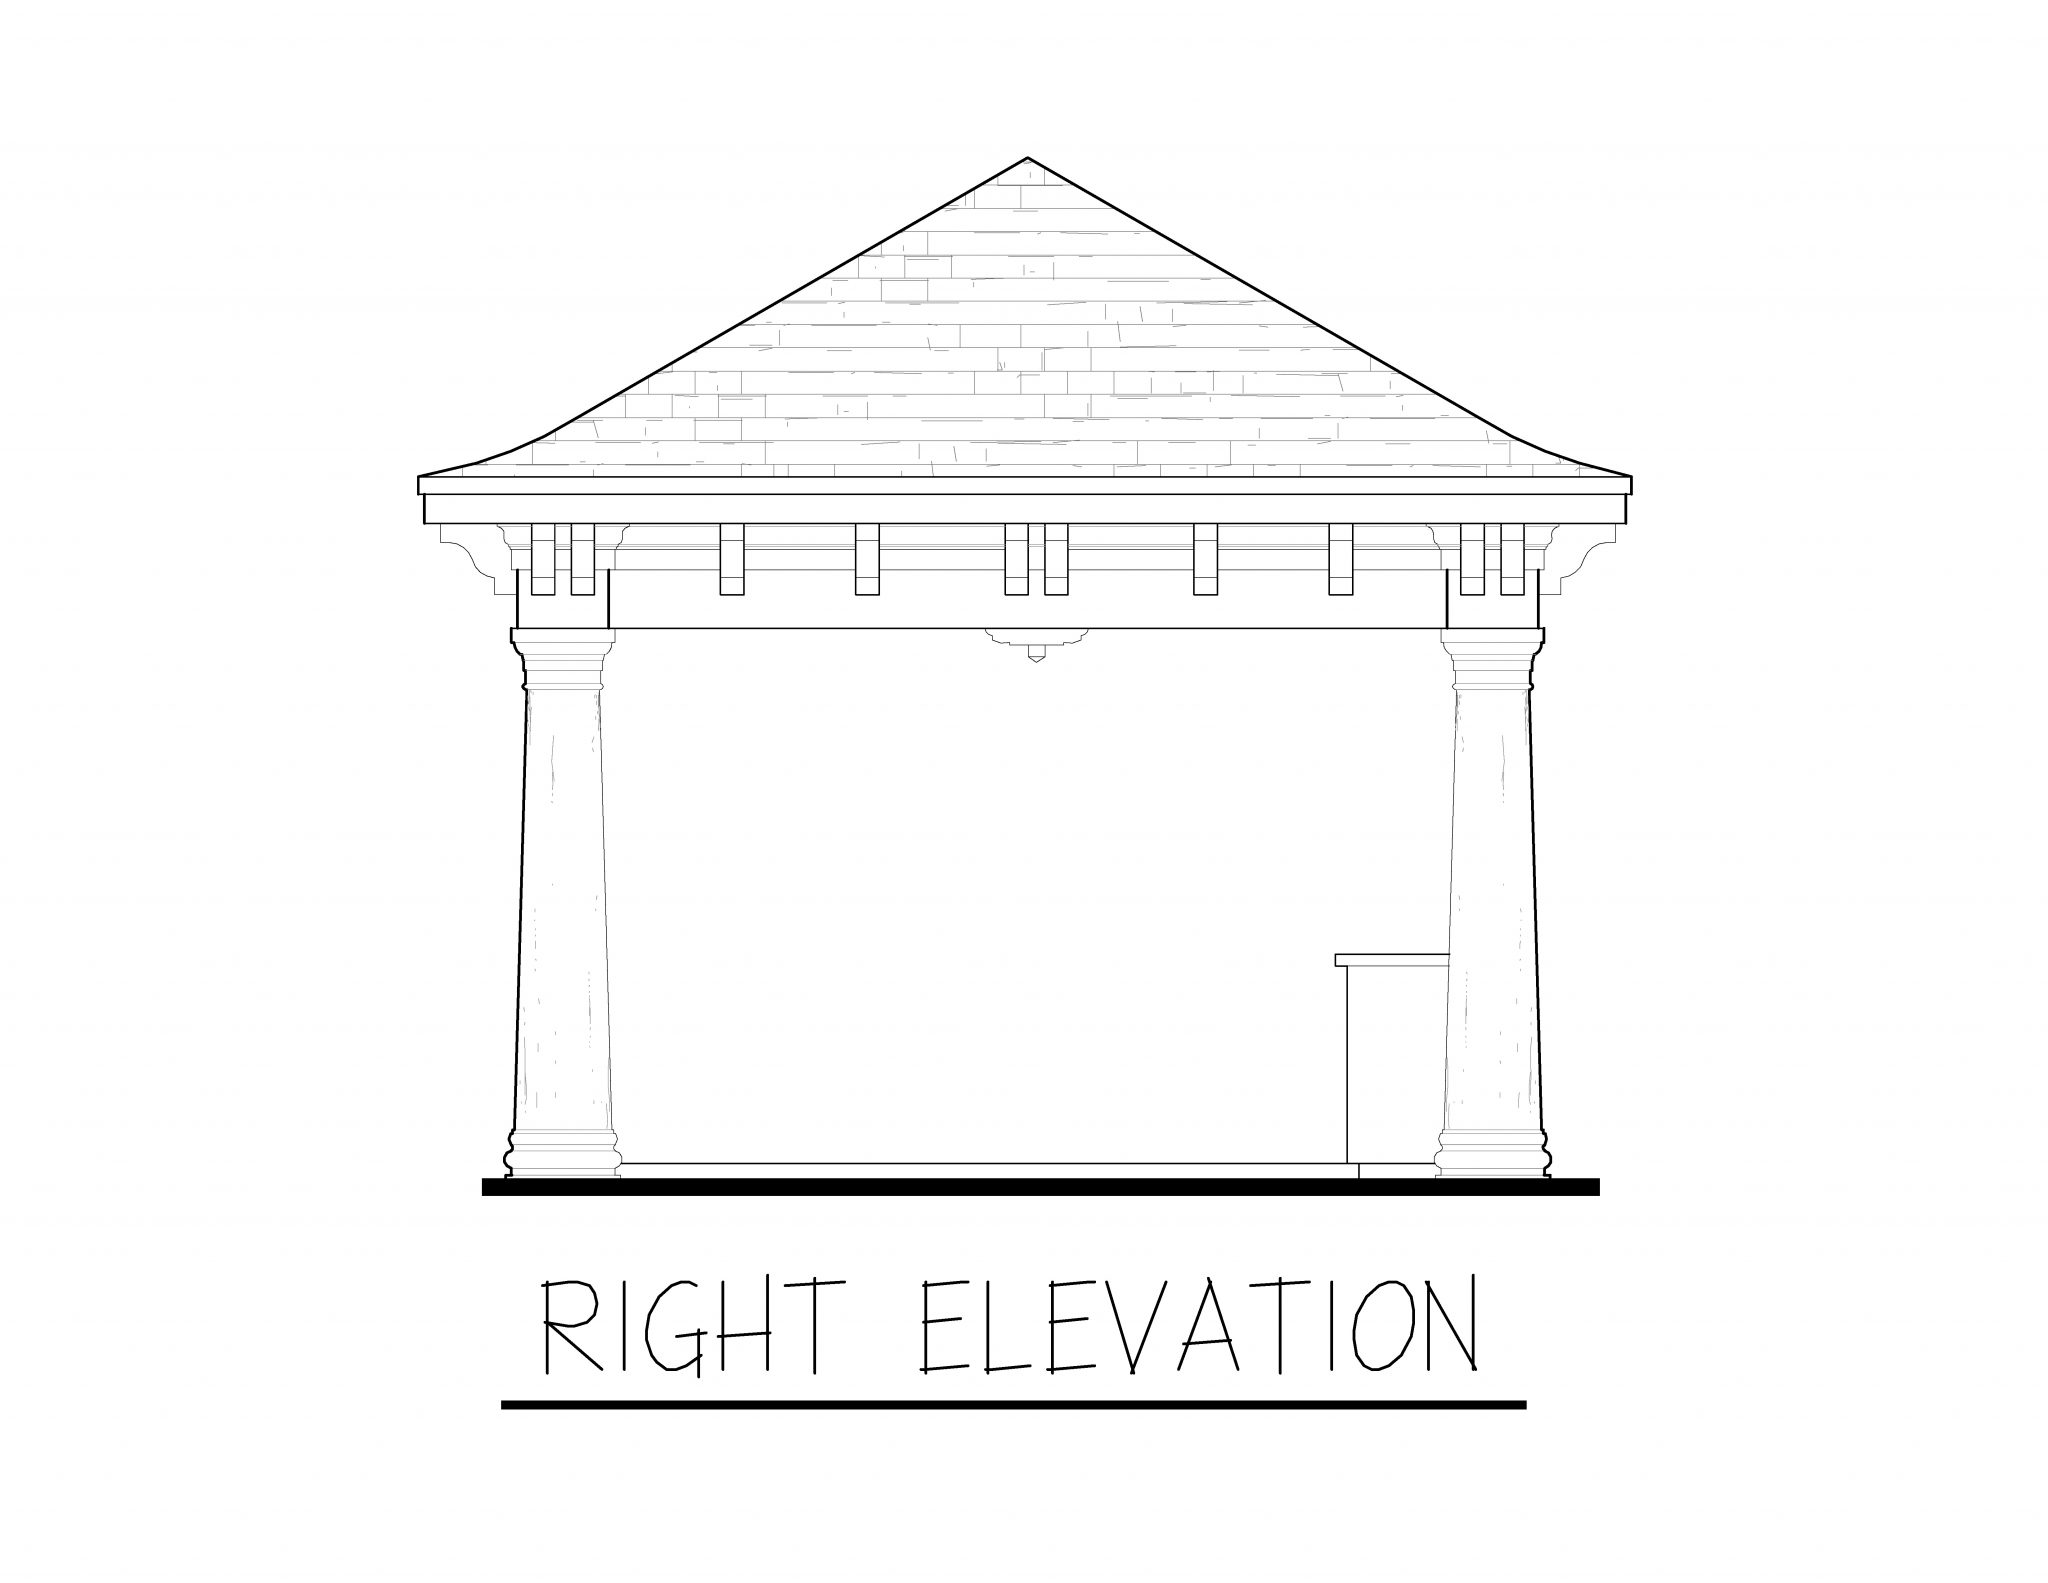 Michael-Buss-Architects-14009-Elevation